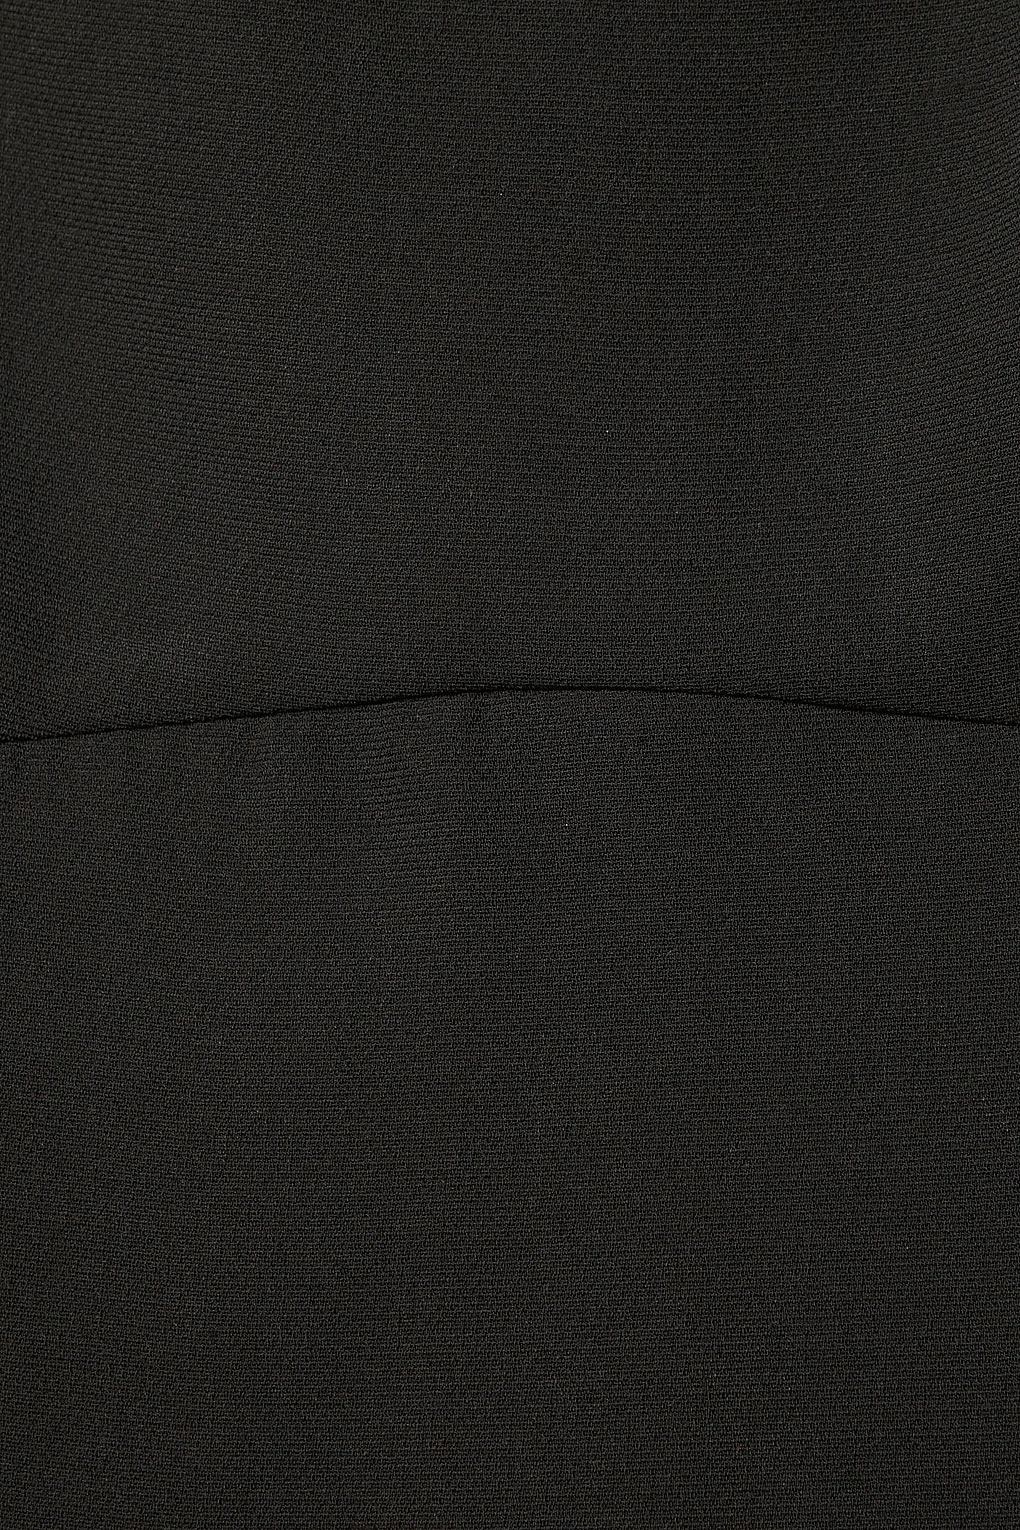 TOPSHOP Curve Seam Shift Dress in Black - Lyst